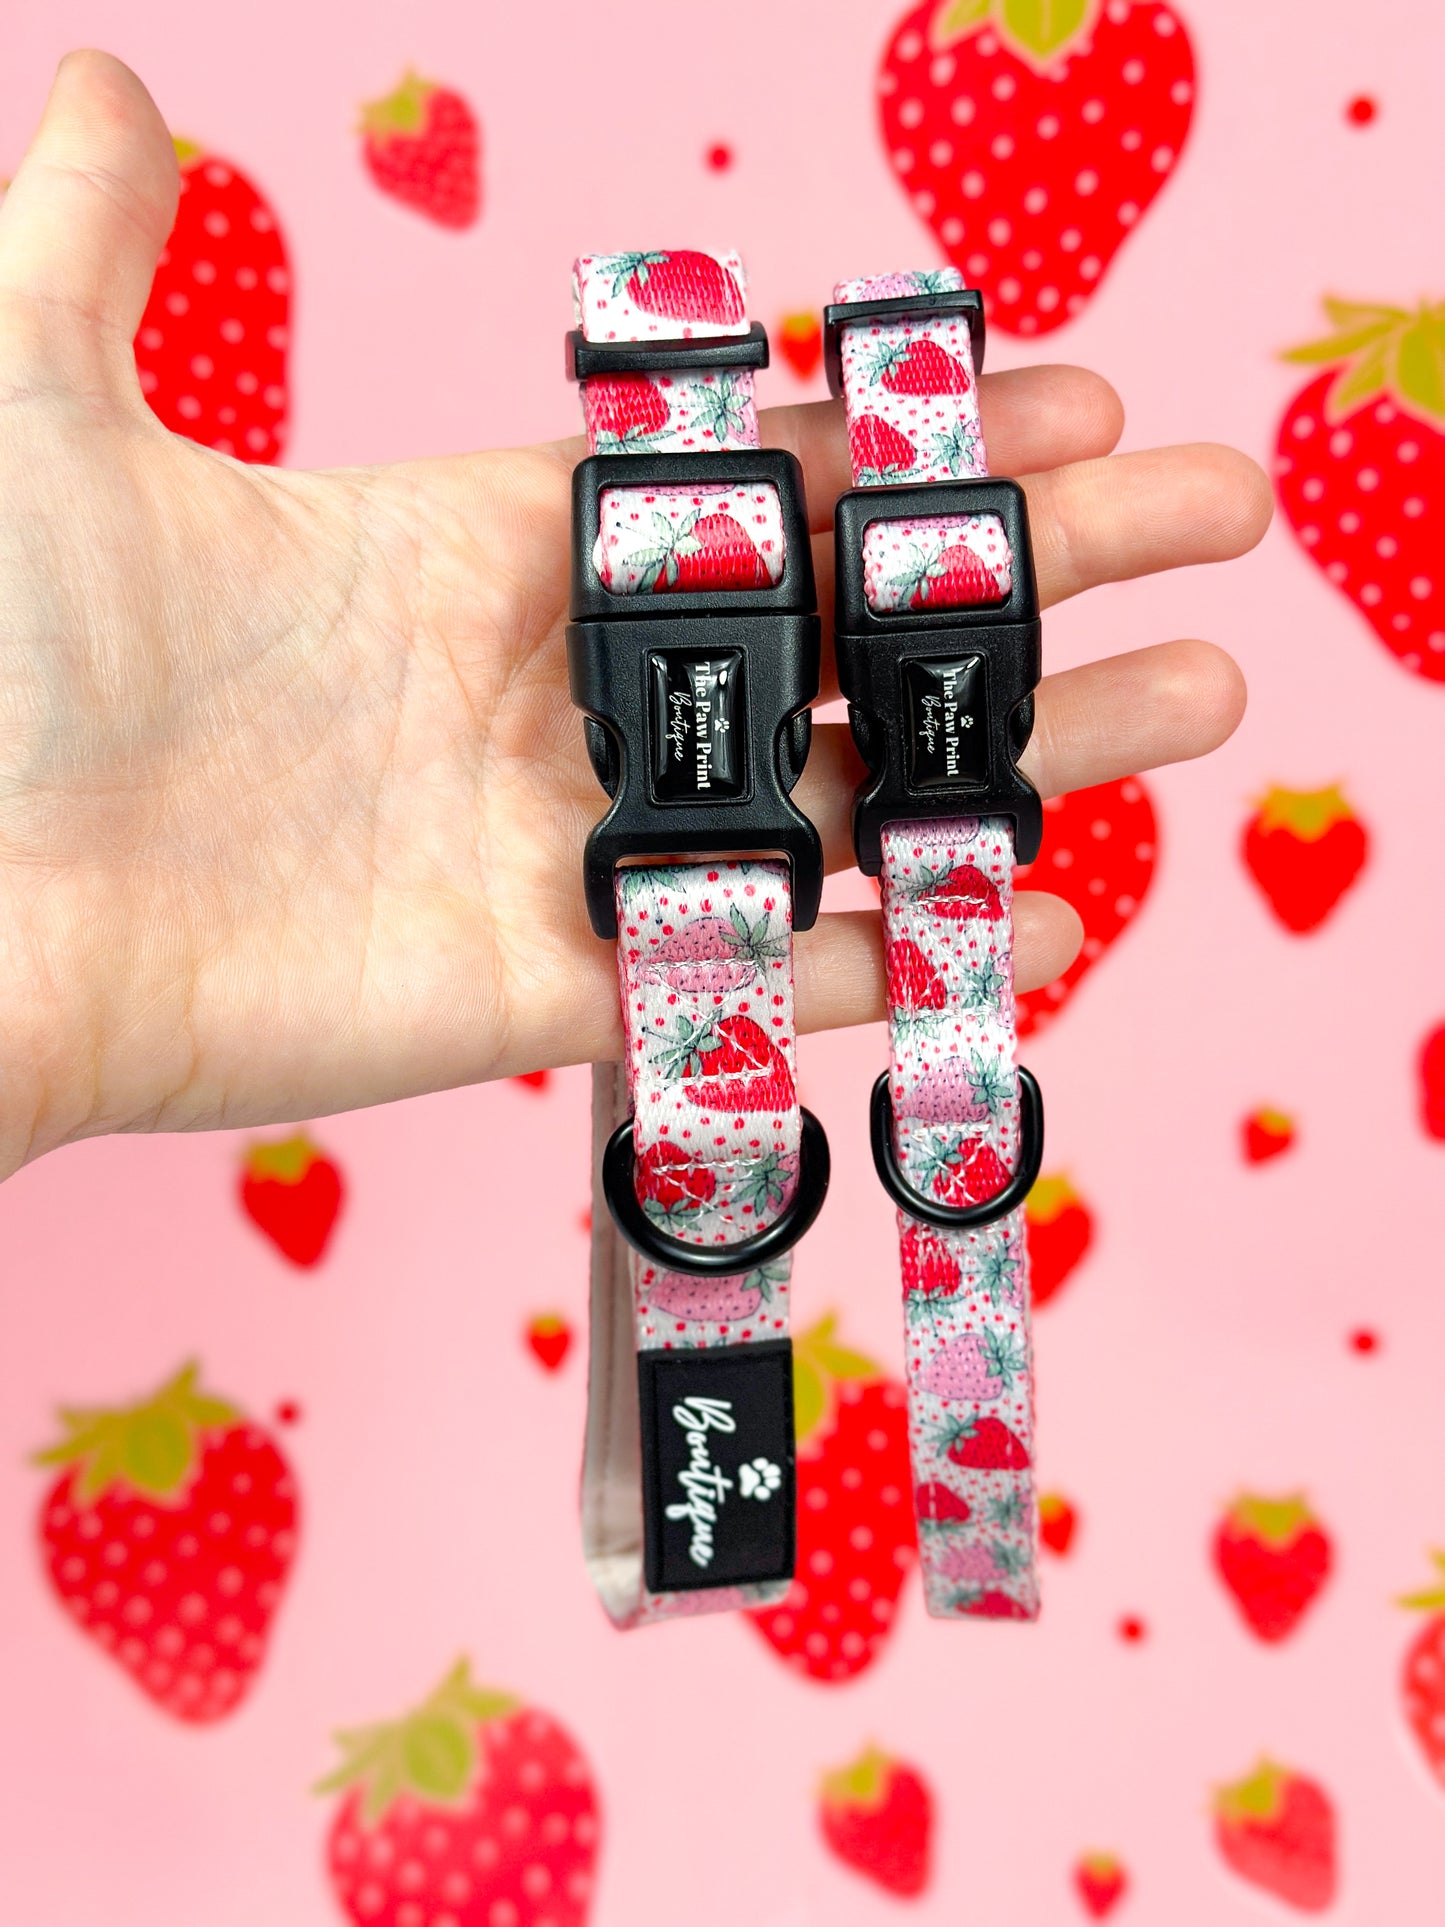 The Sweet Strawberries Collar